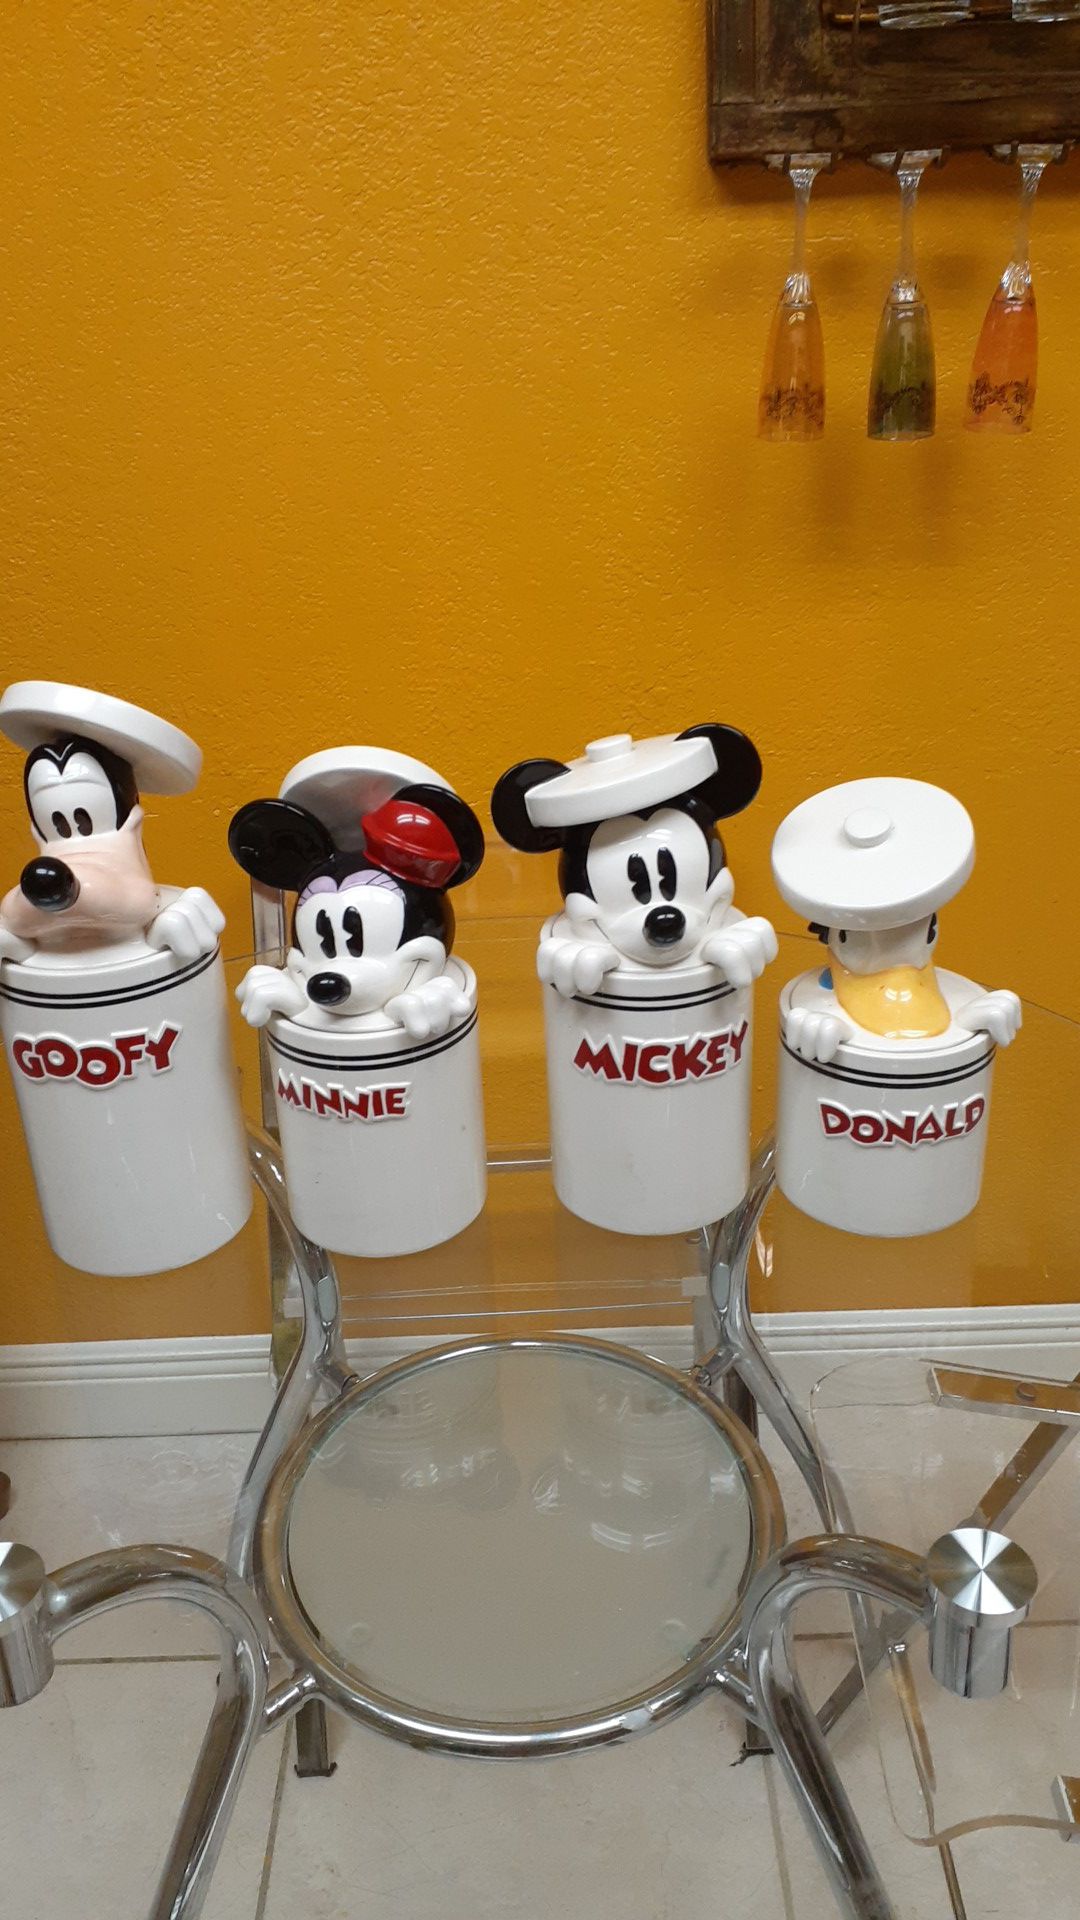 Goofy, minnie, Mickey and Donald Disney characters